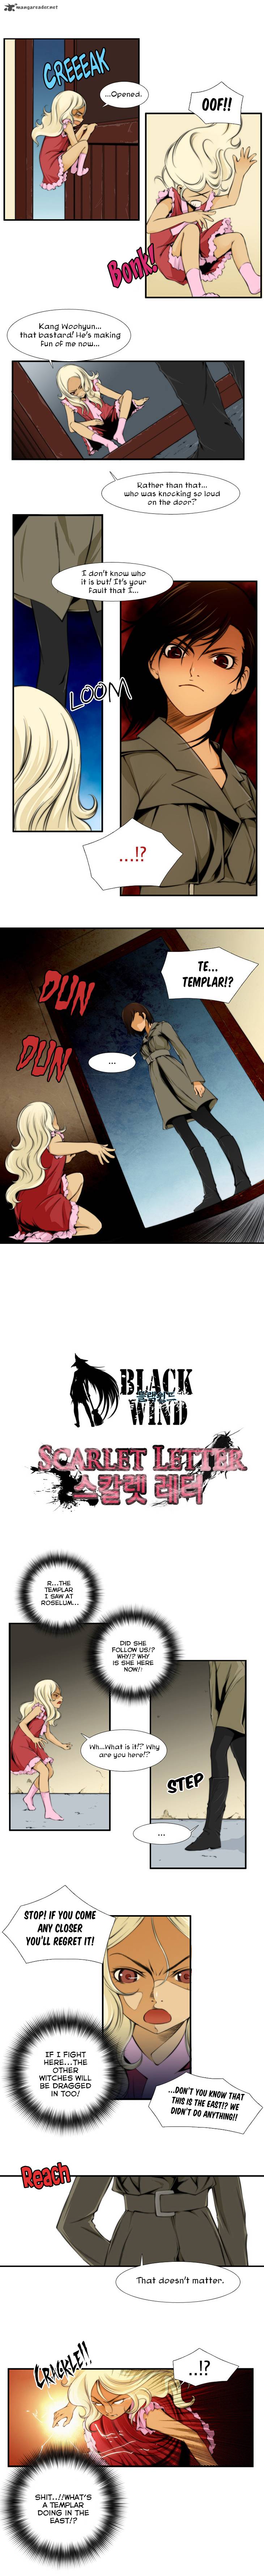 black_wind_20_3